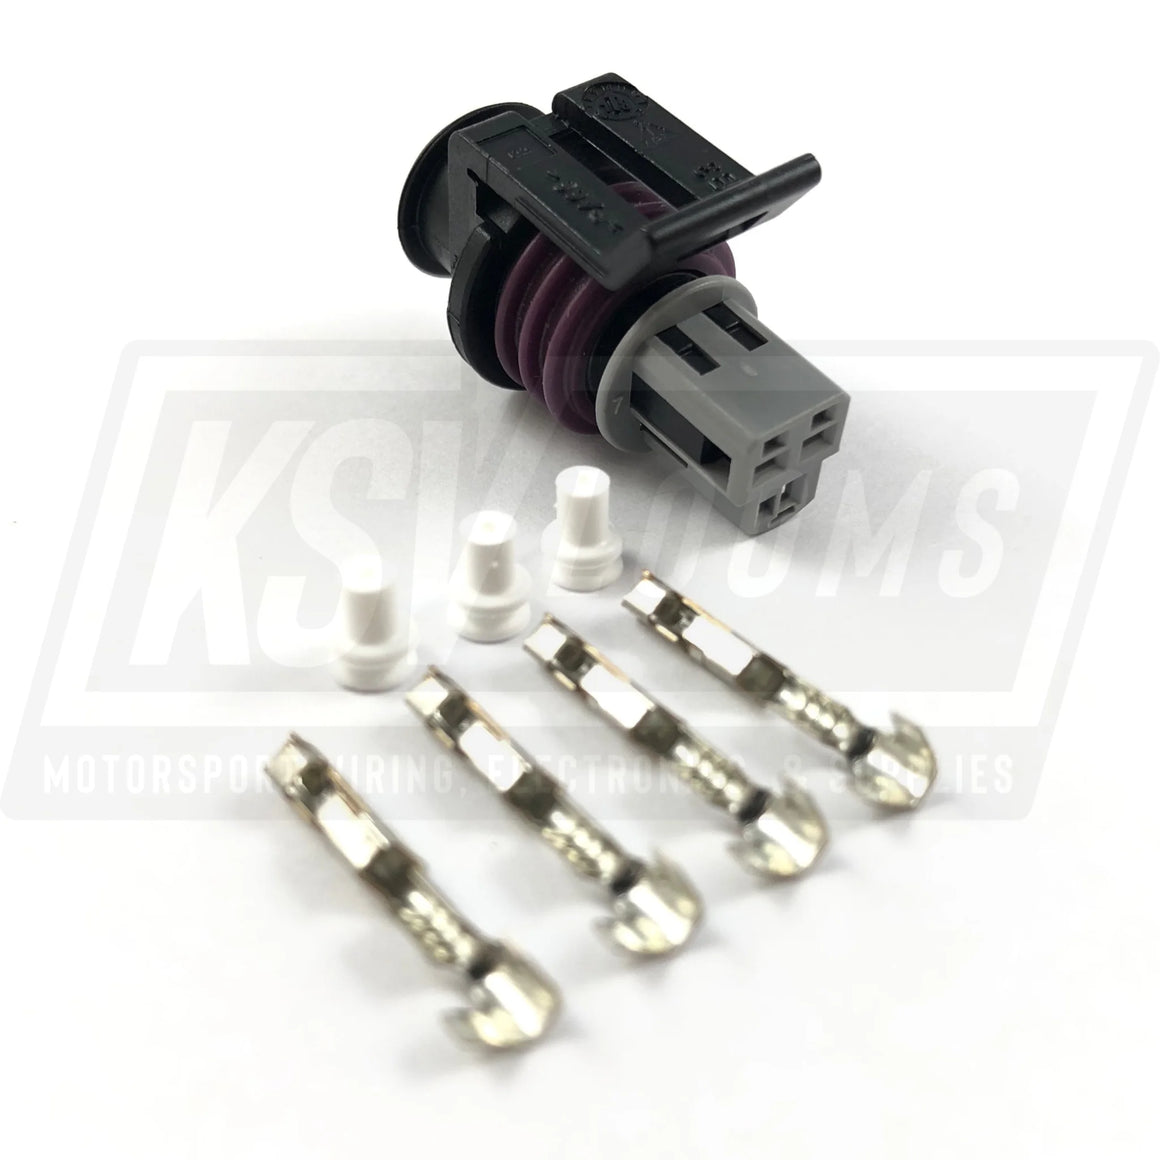 3-Way Connector Kit Fits Fueltech Pan Vacuum Sensor 5005100031-Blk (22-20 Awg)